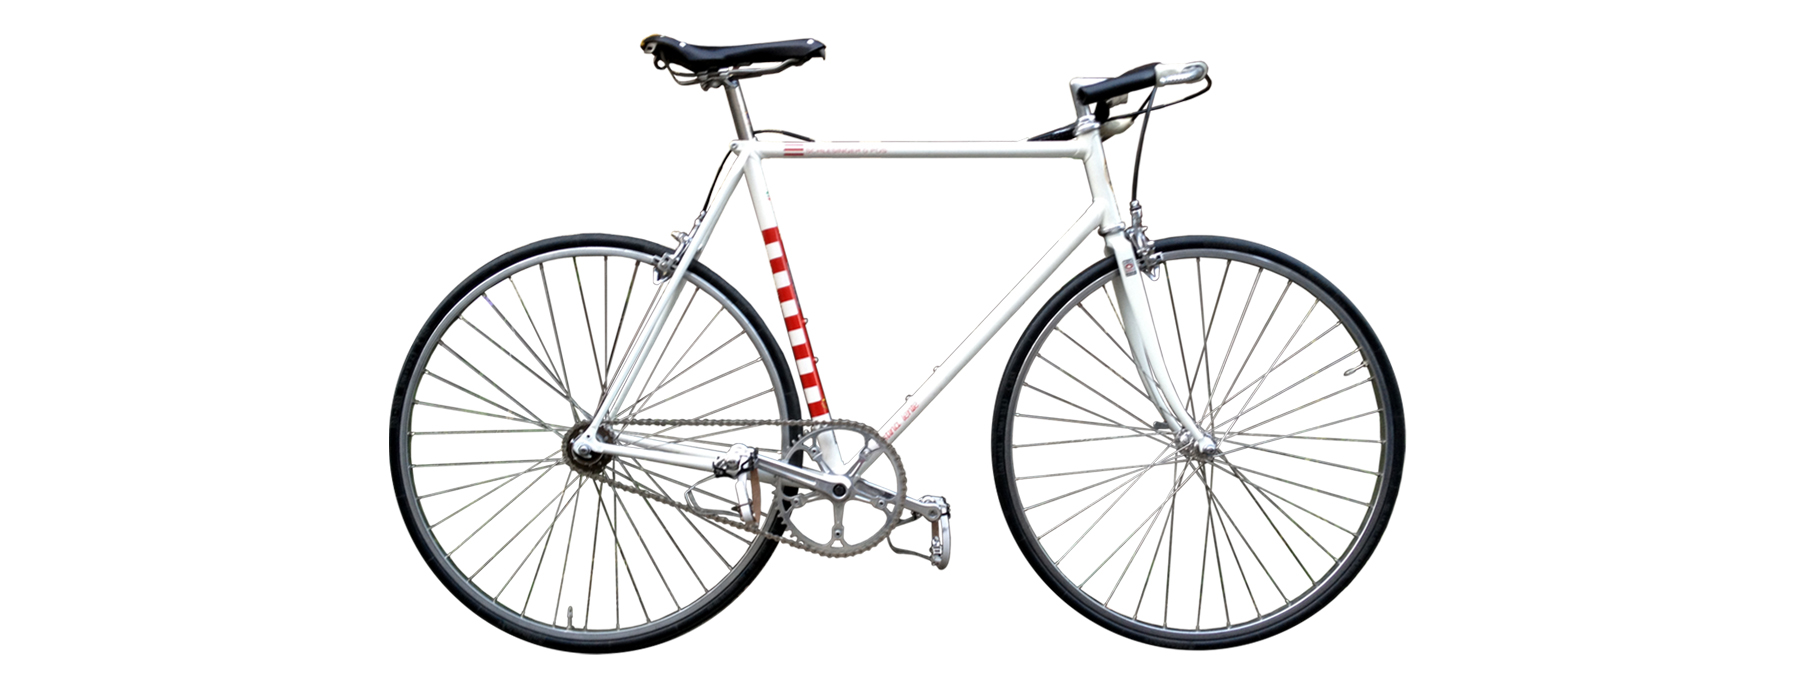 de curae | italian steel bike – Thorsten Schlesinger